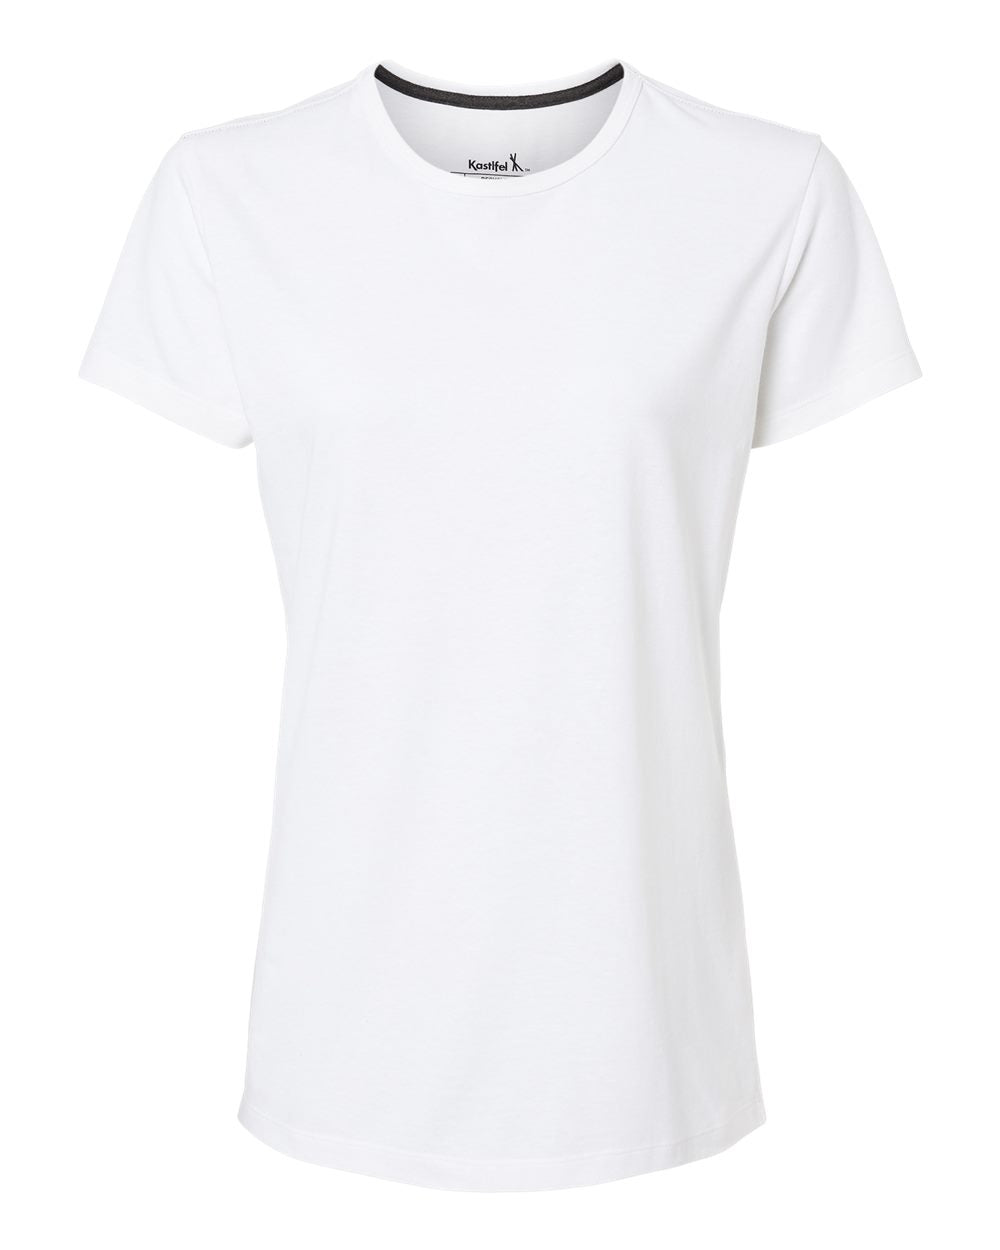 Customizable Kastlfel recycledsoft t-shirt women in white